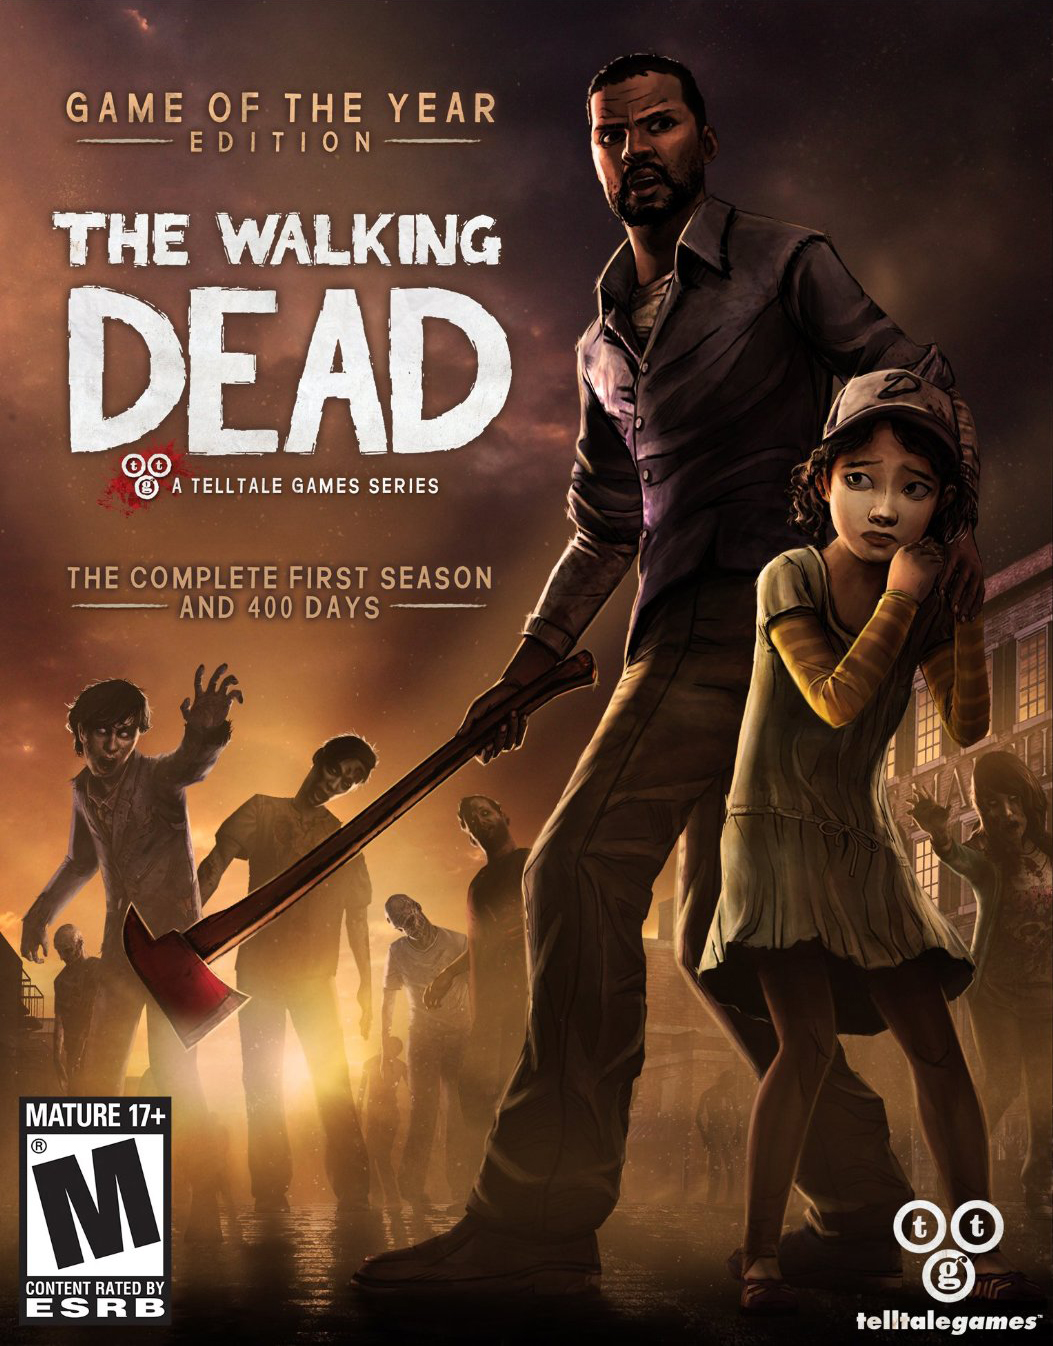 the walking dead game season 1 xbox one